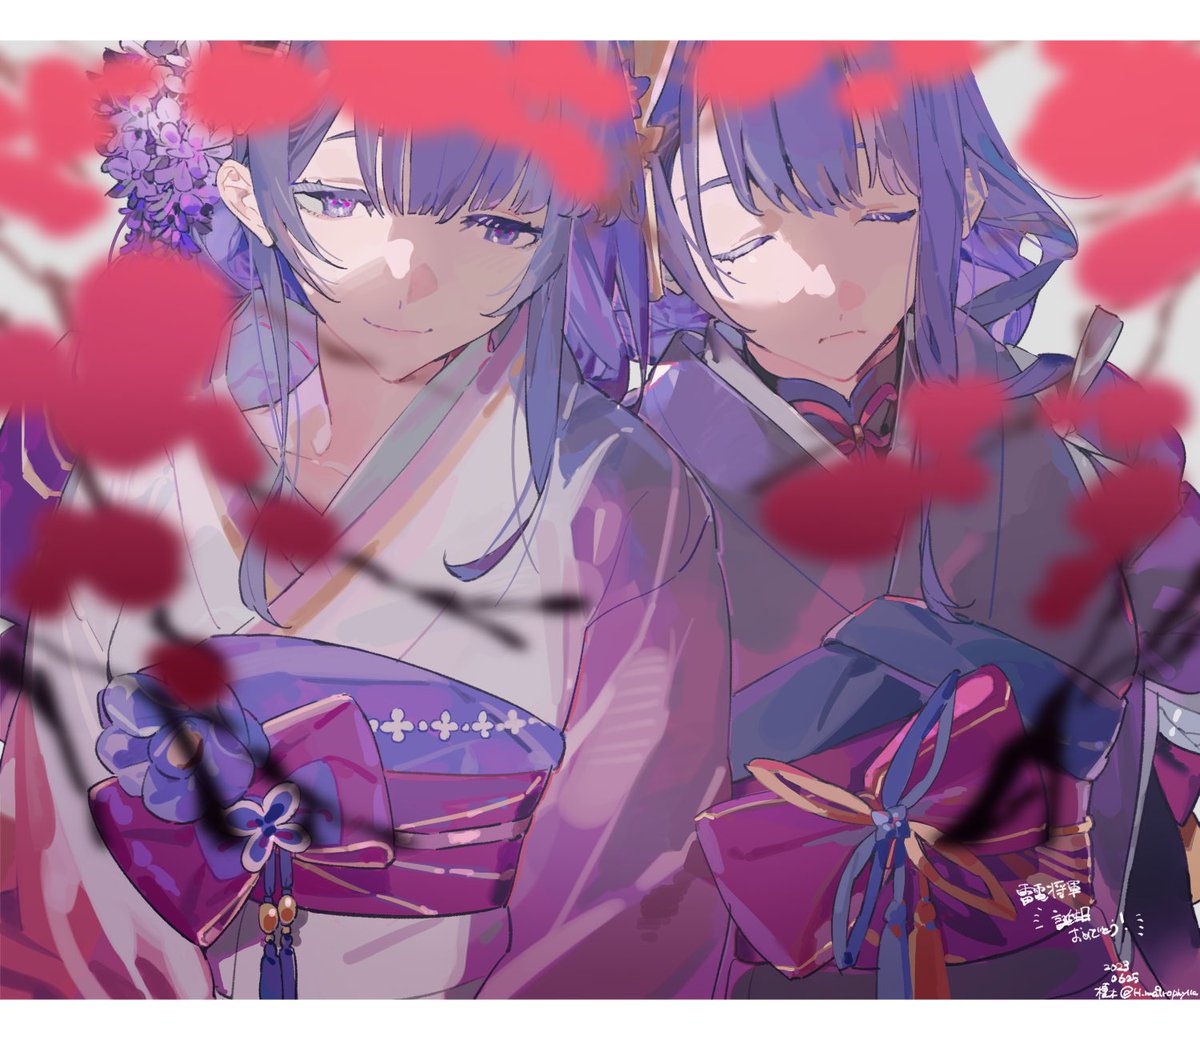 raiden shogun kimono multiple girls 2girls japanese clothes purple hair obi sash  illustration images